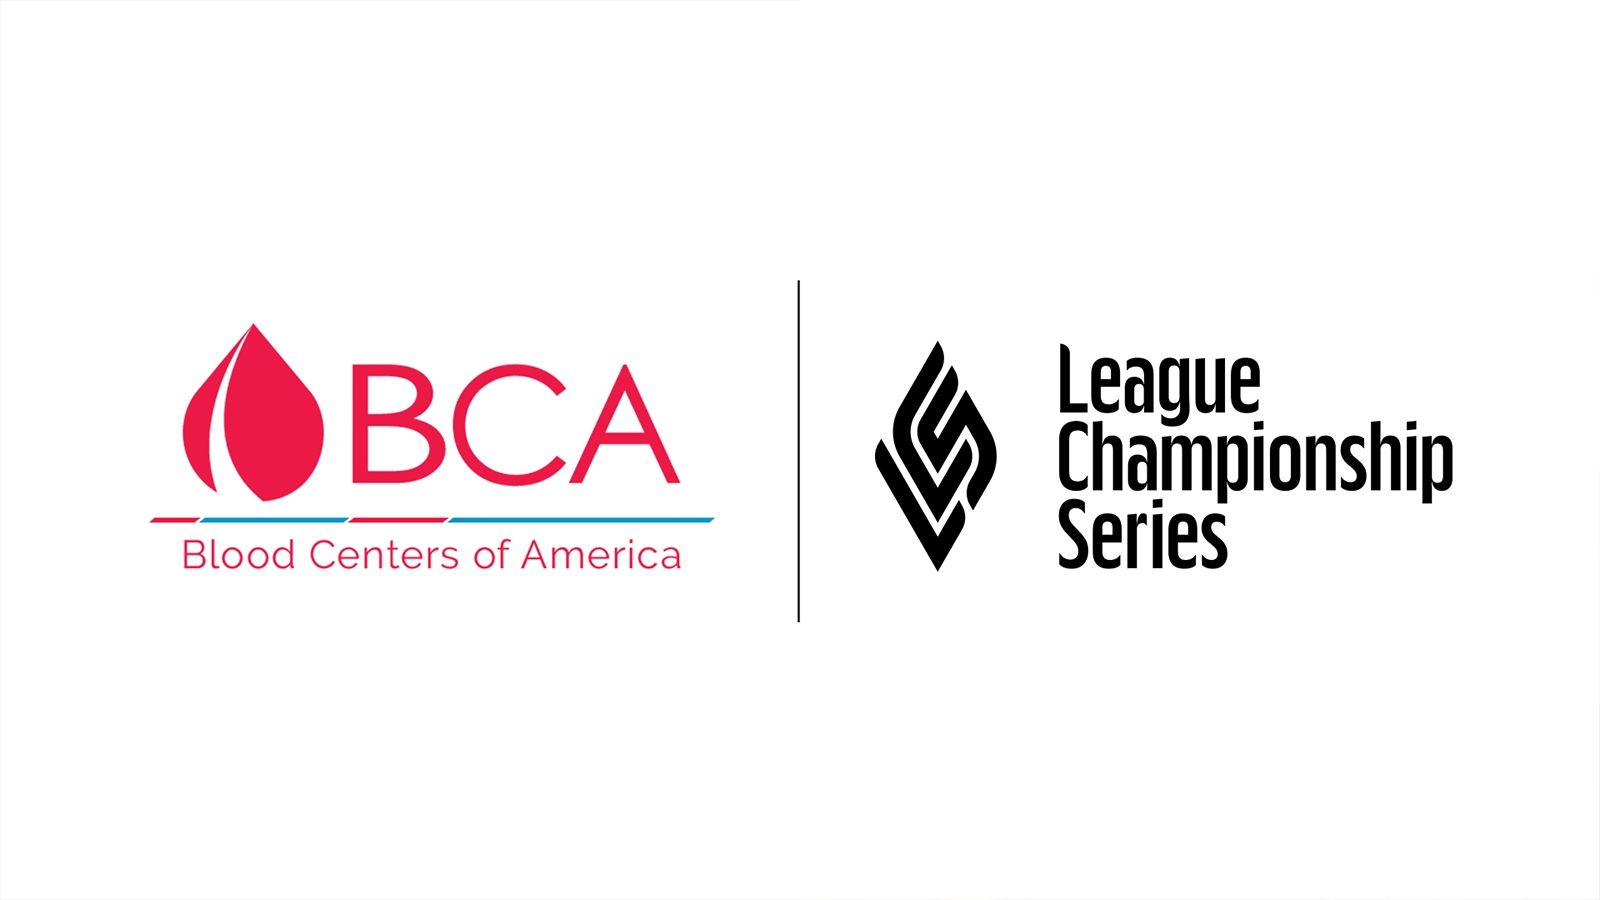 Логотипы ассоциации и чемпионата LCS